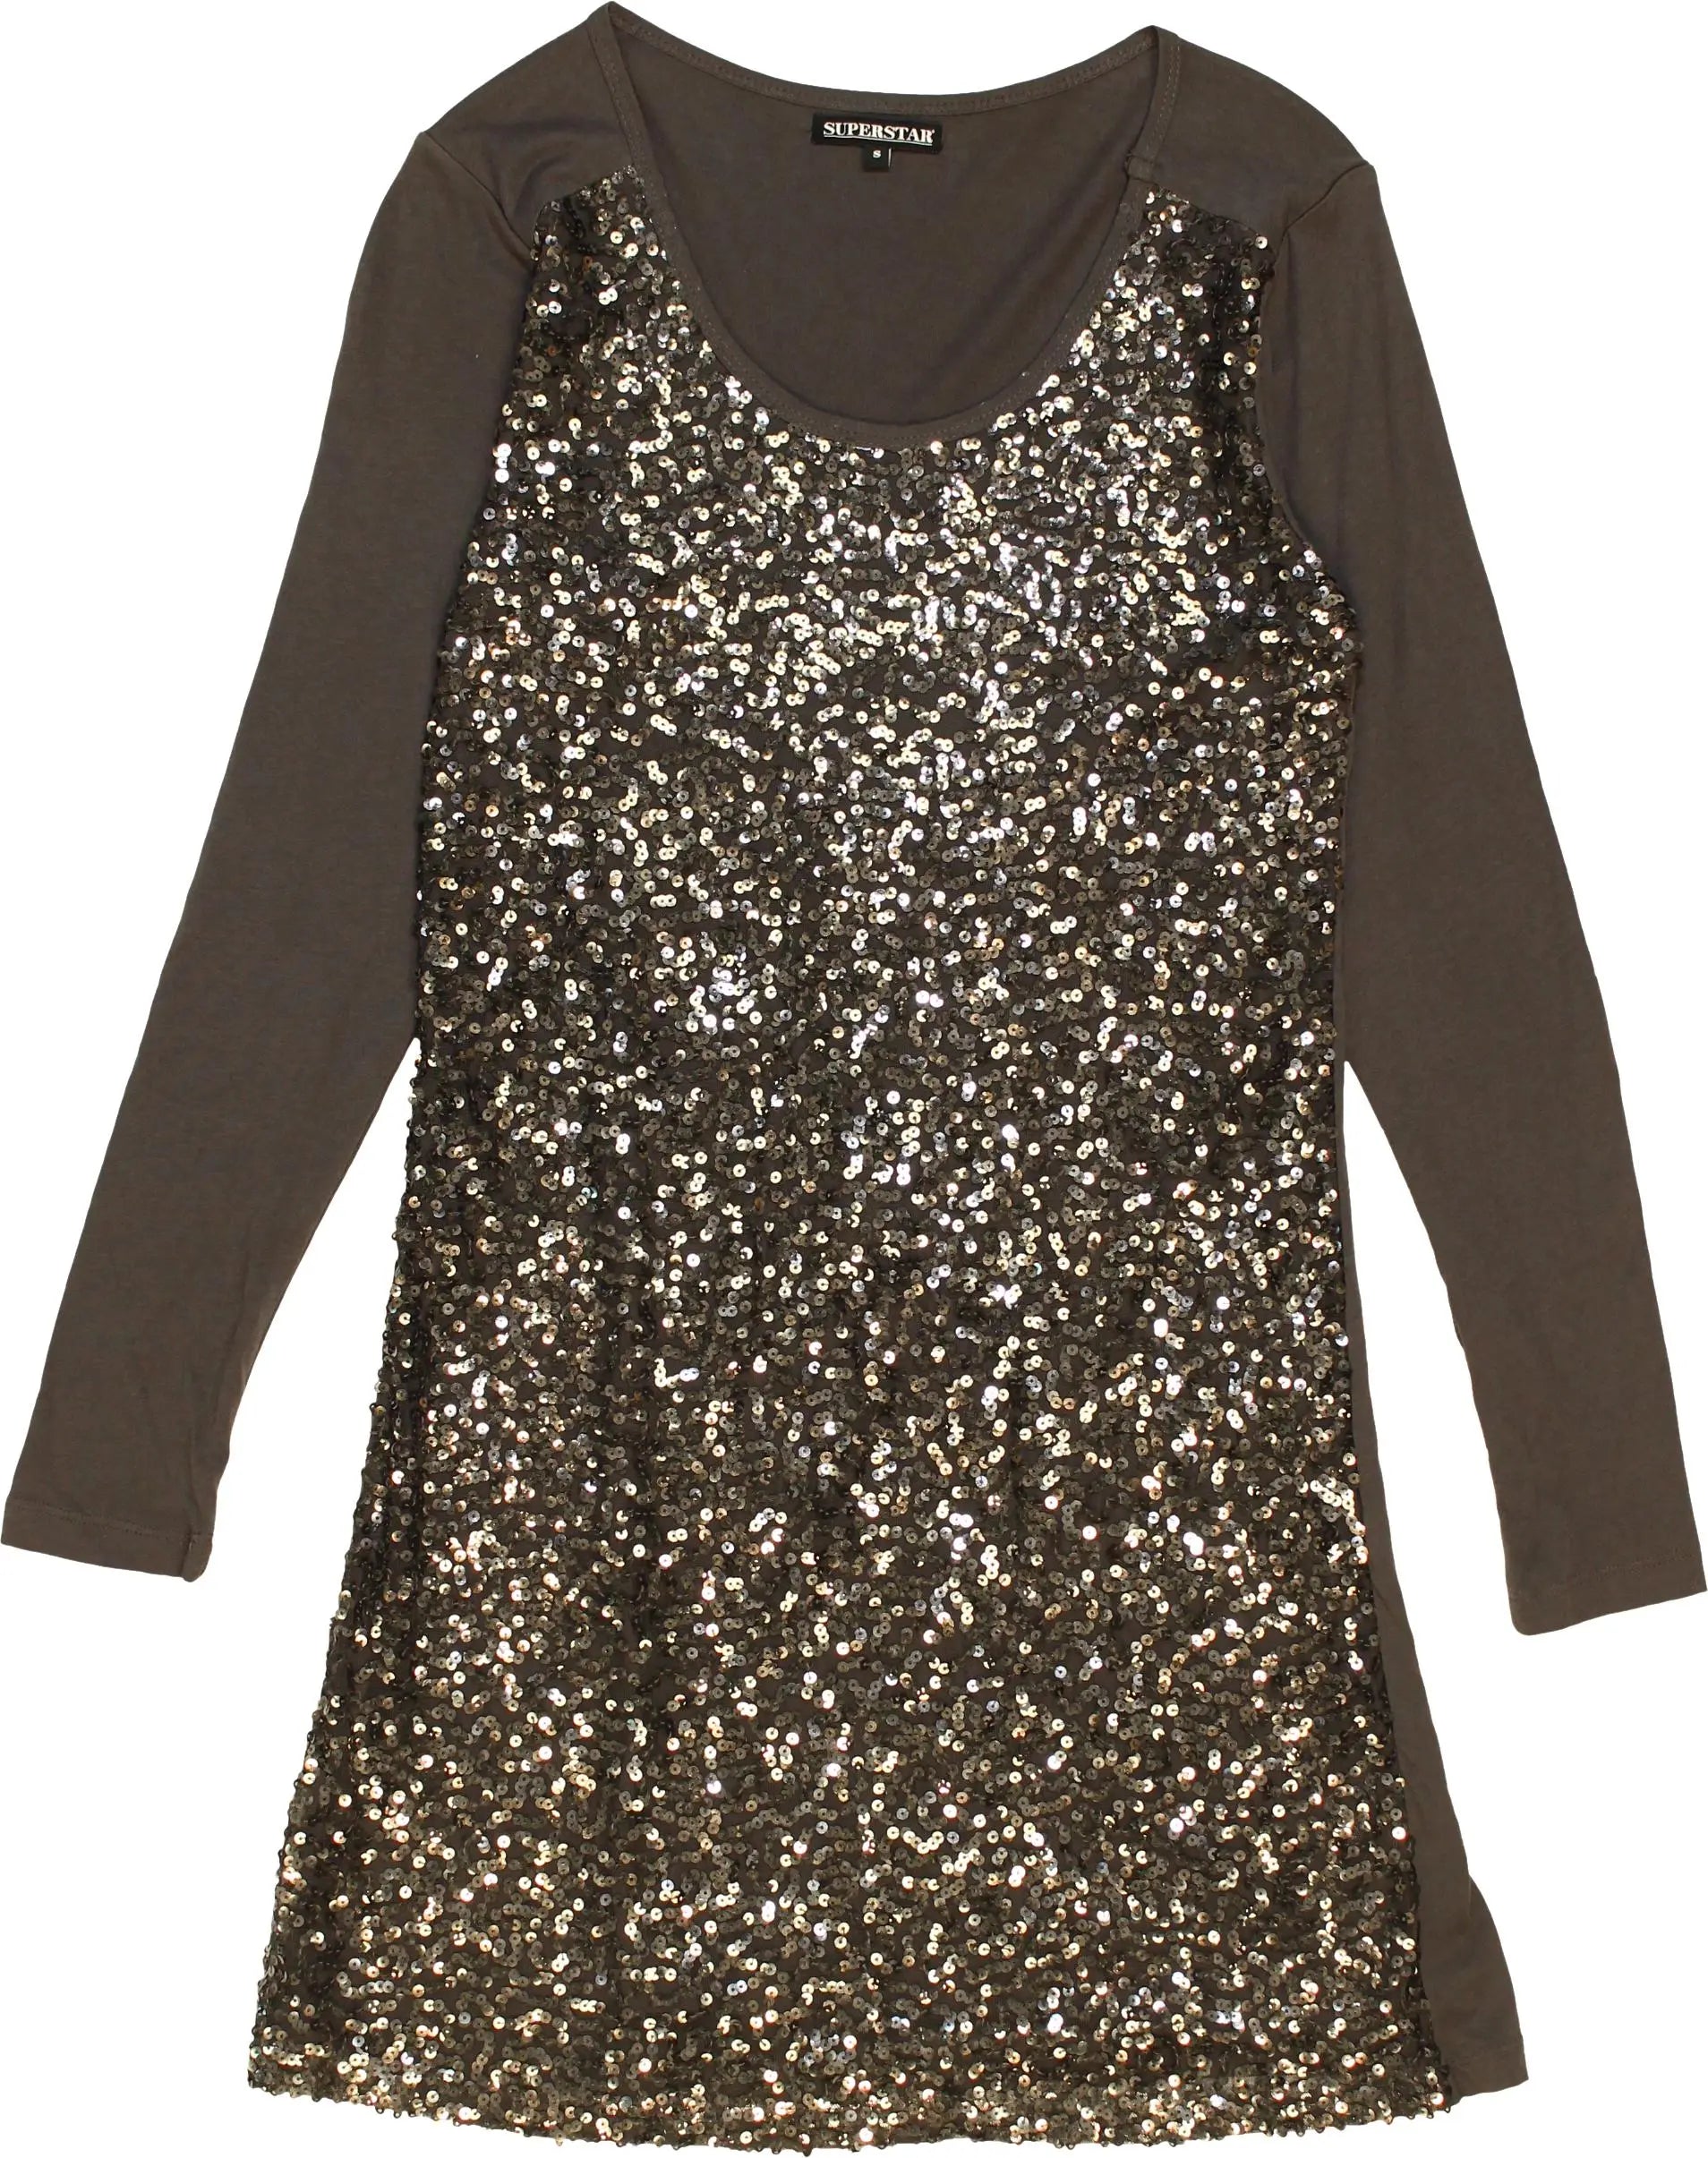 Superstar - Sequin Dress- ThriftTale.com - Vintage and second handclothing